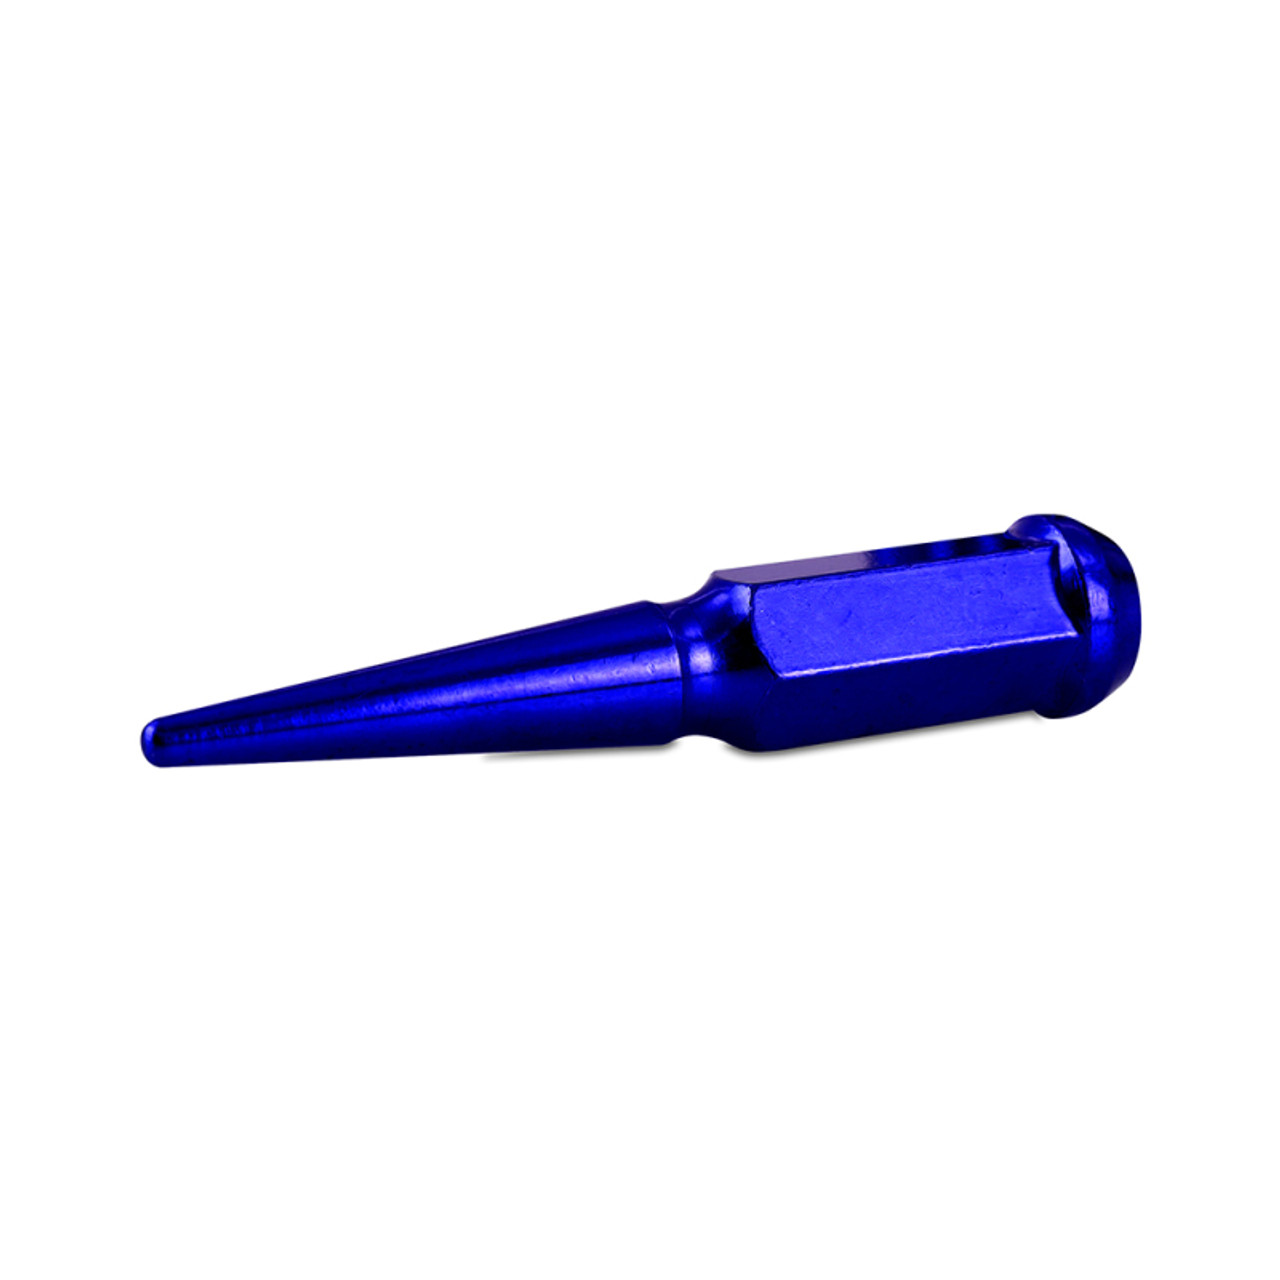 Mishimoto Mishimoto Steel Spiked Lug Nuts M14 x 1.5 24pc Set Blue - MMLG-SP1415-24BL User 1